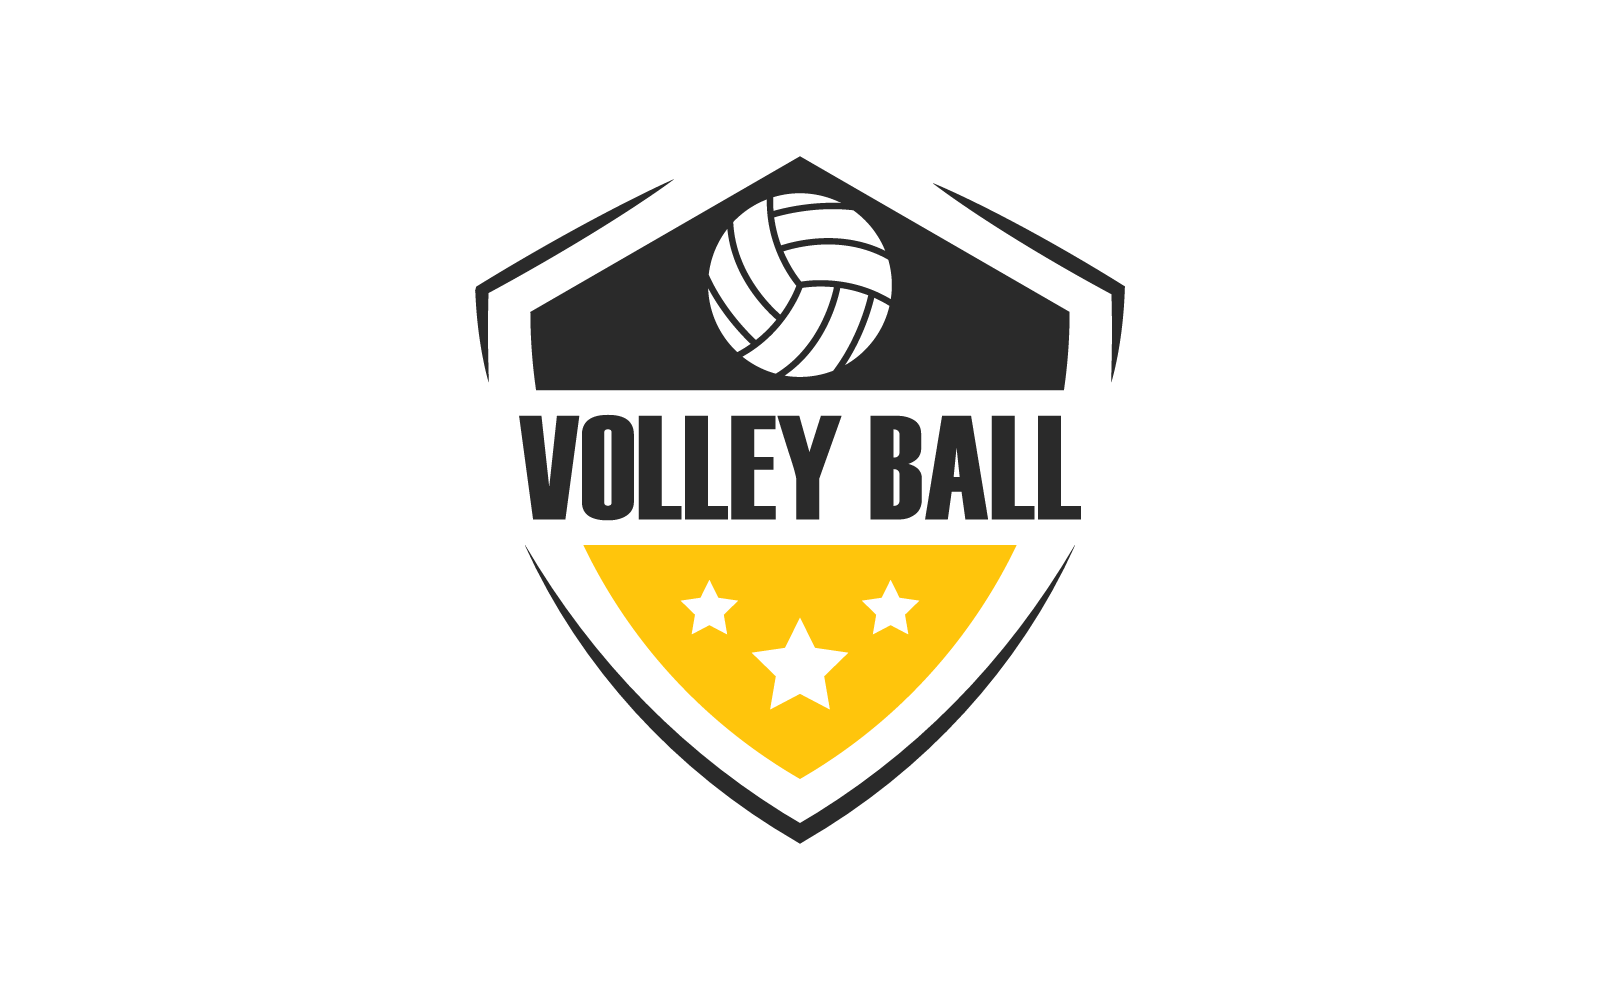 Volley ball logo vector illustration design template